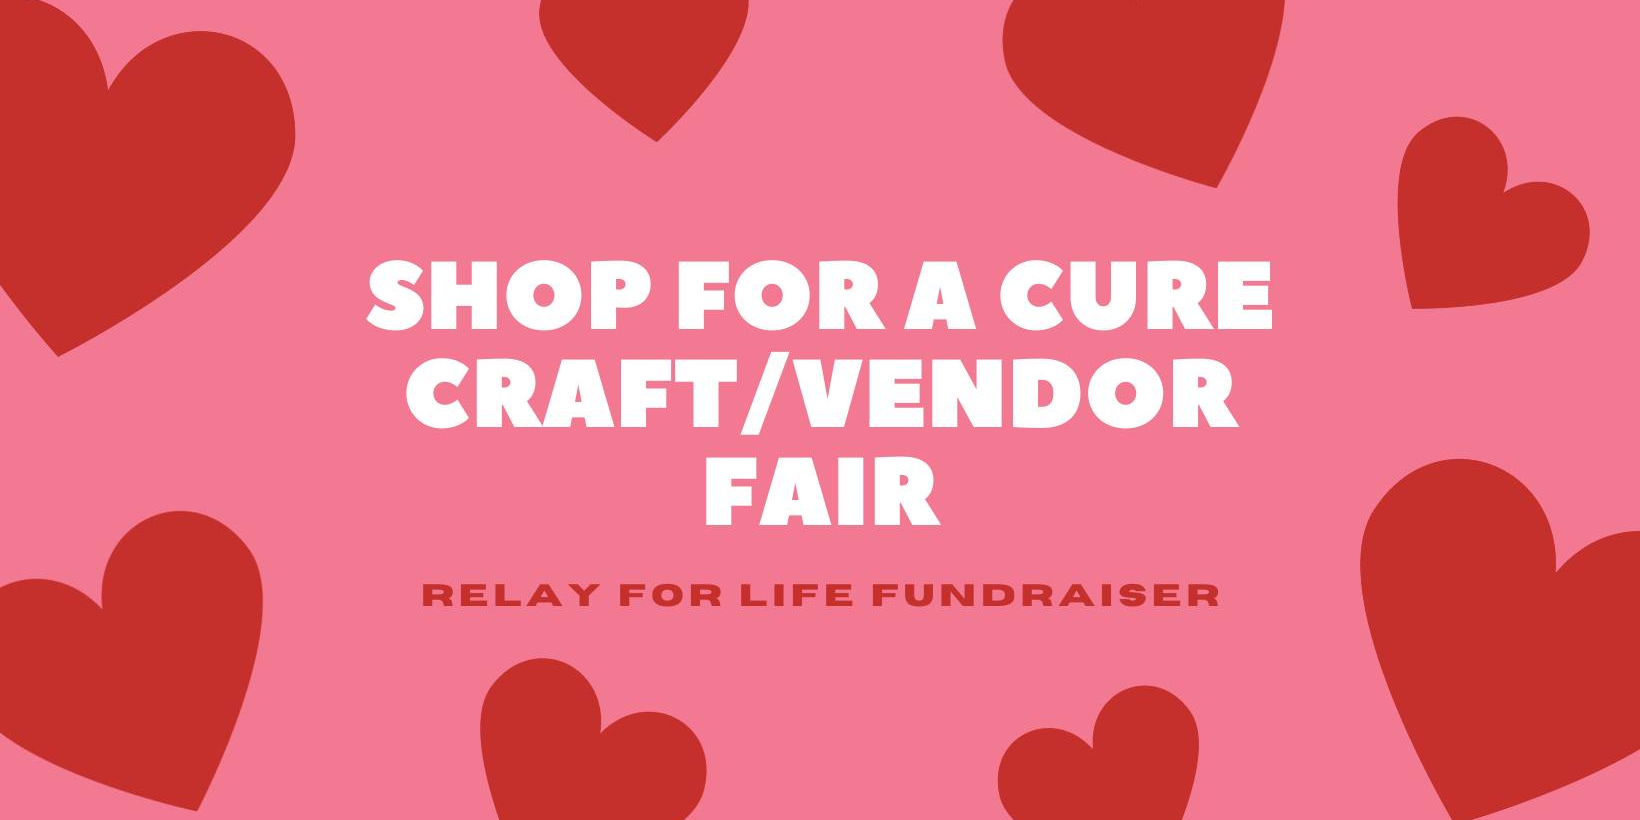 Shop for a Cure Craft/Vendor Event promotional image